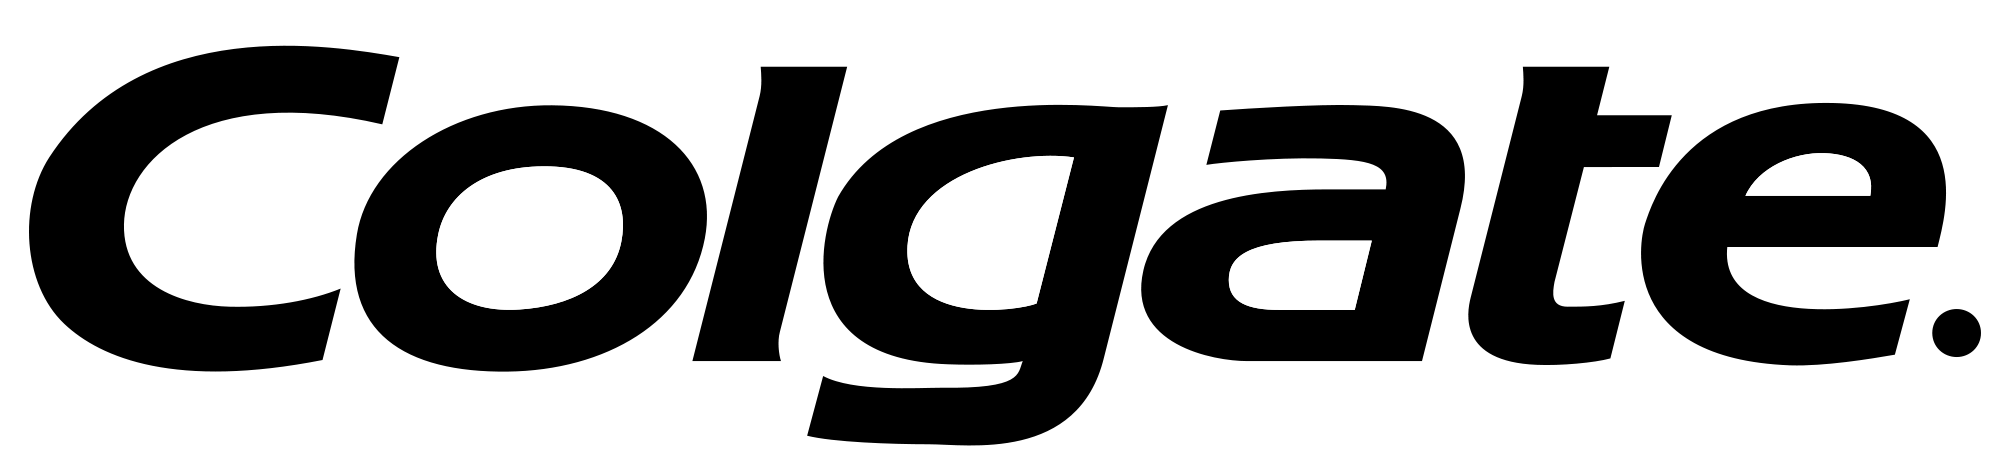 Colgate Logo - Colgate logo.svg